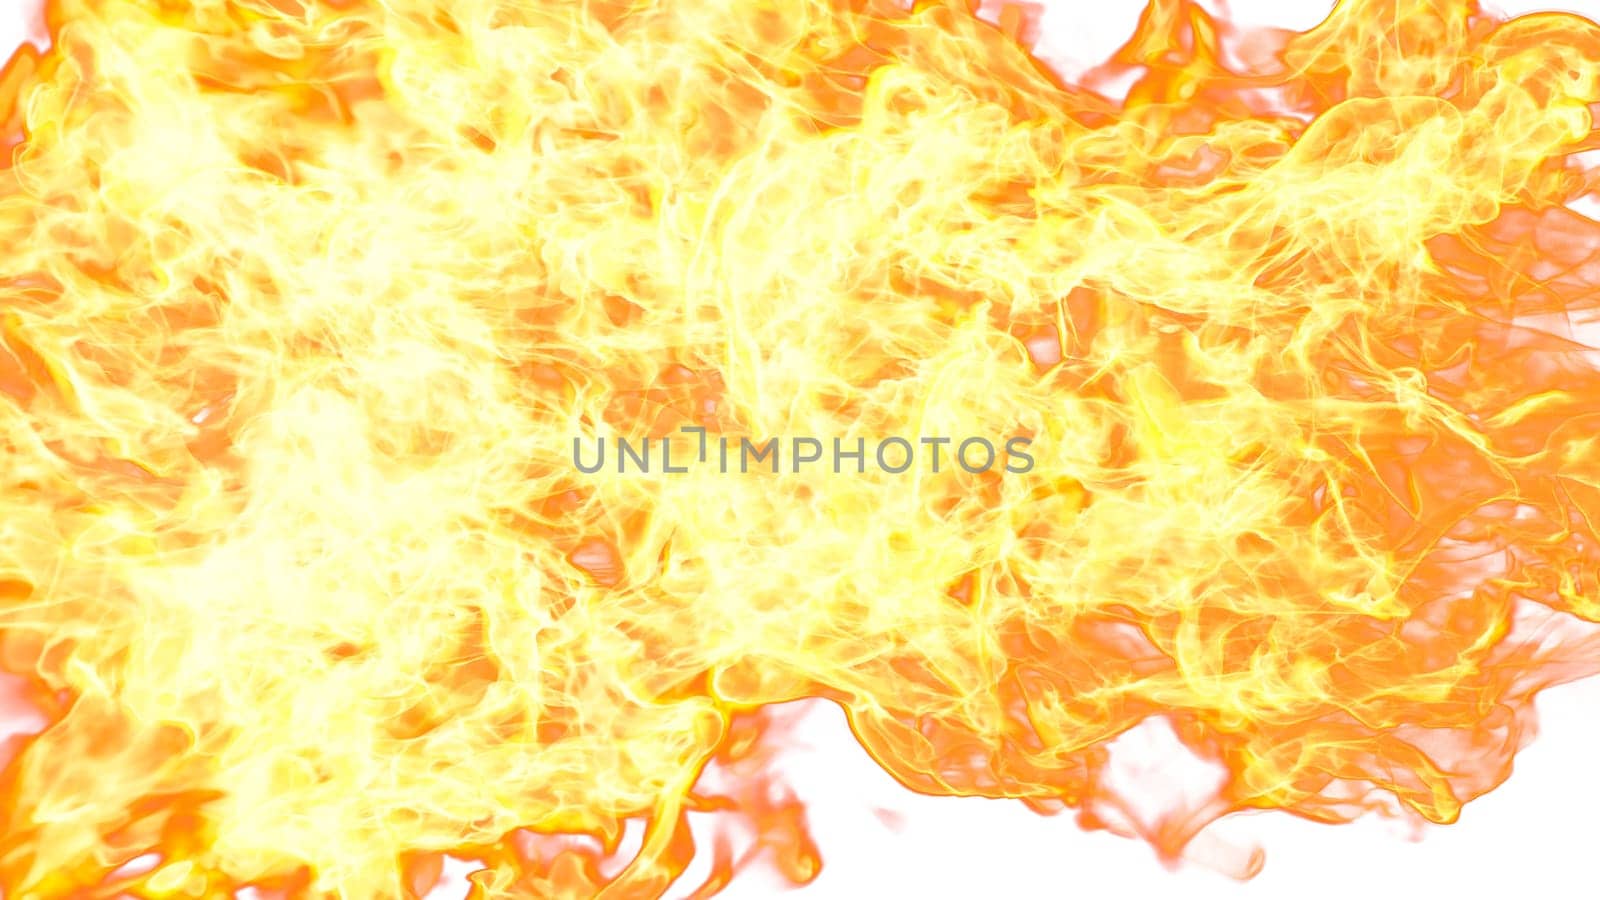 3d illustration. Flame flare on white background